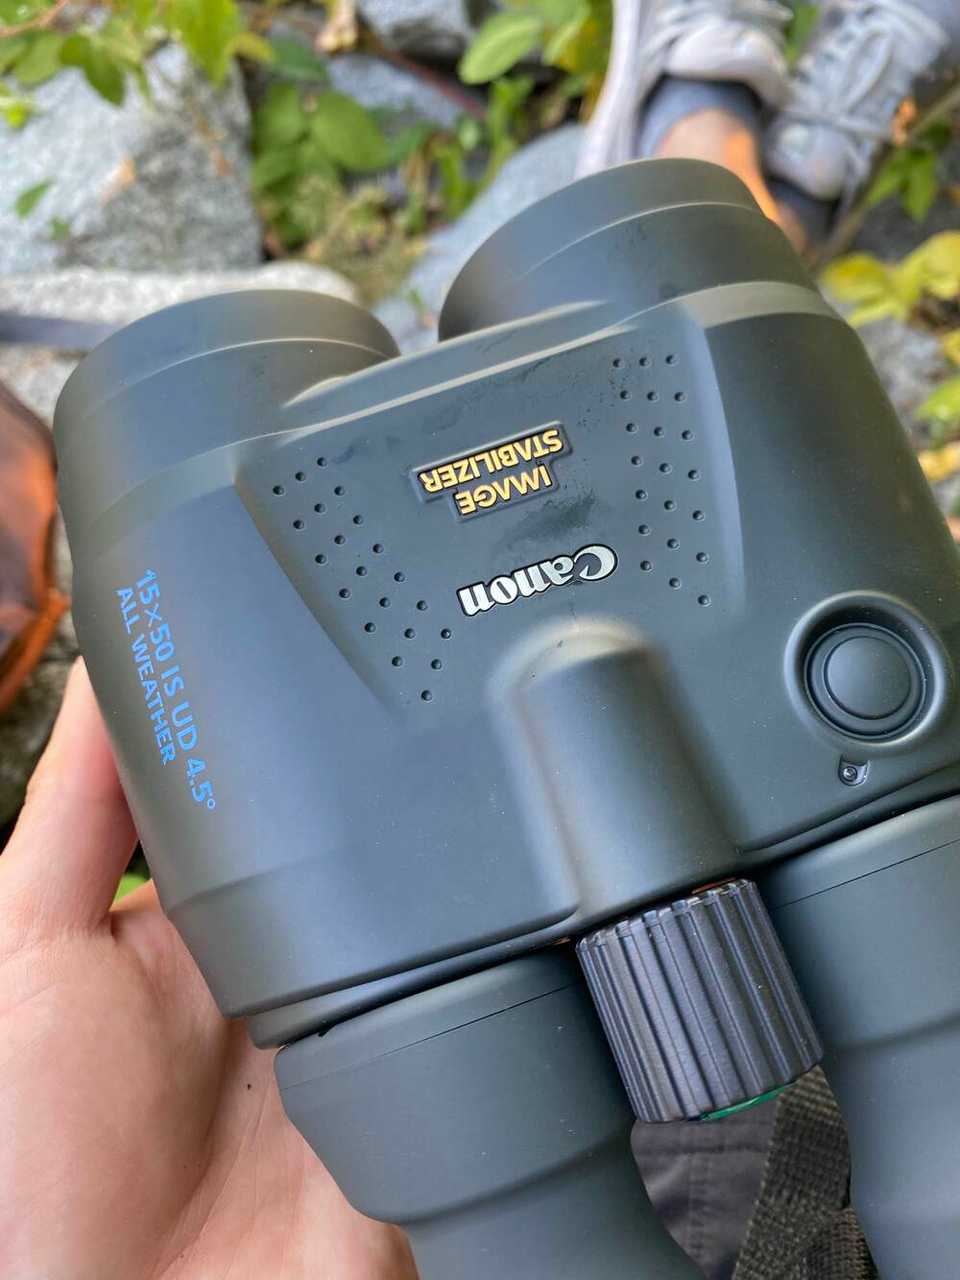 Canon binoculars